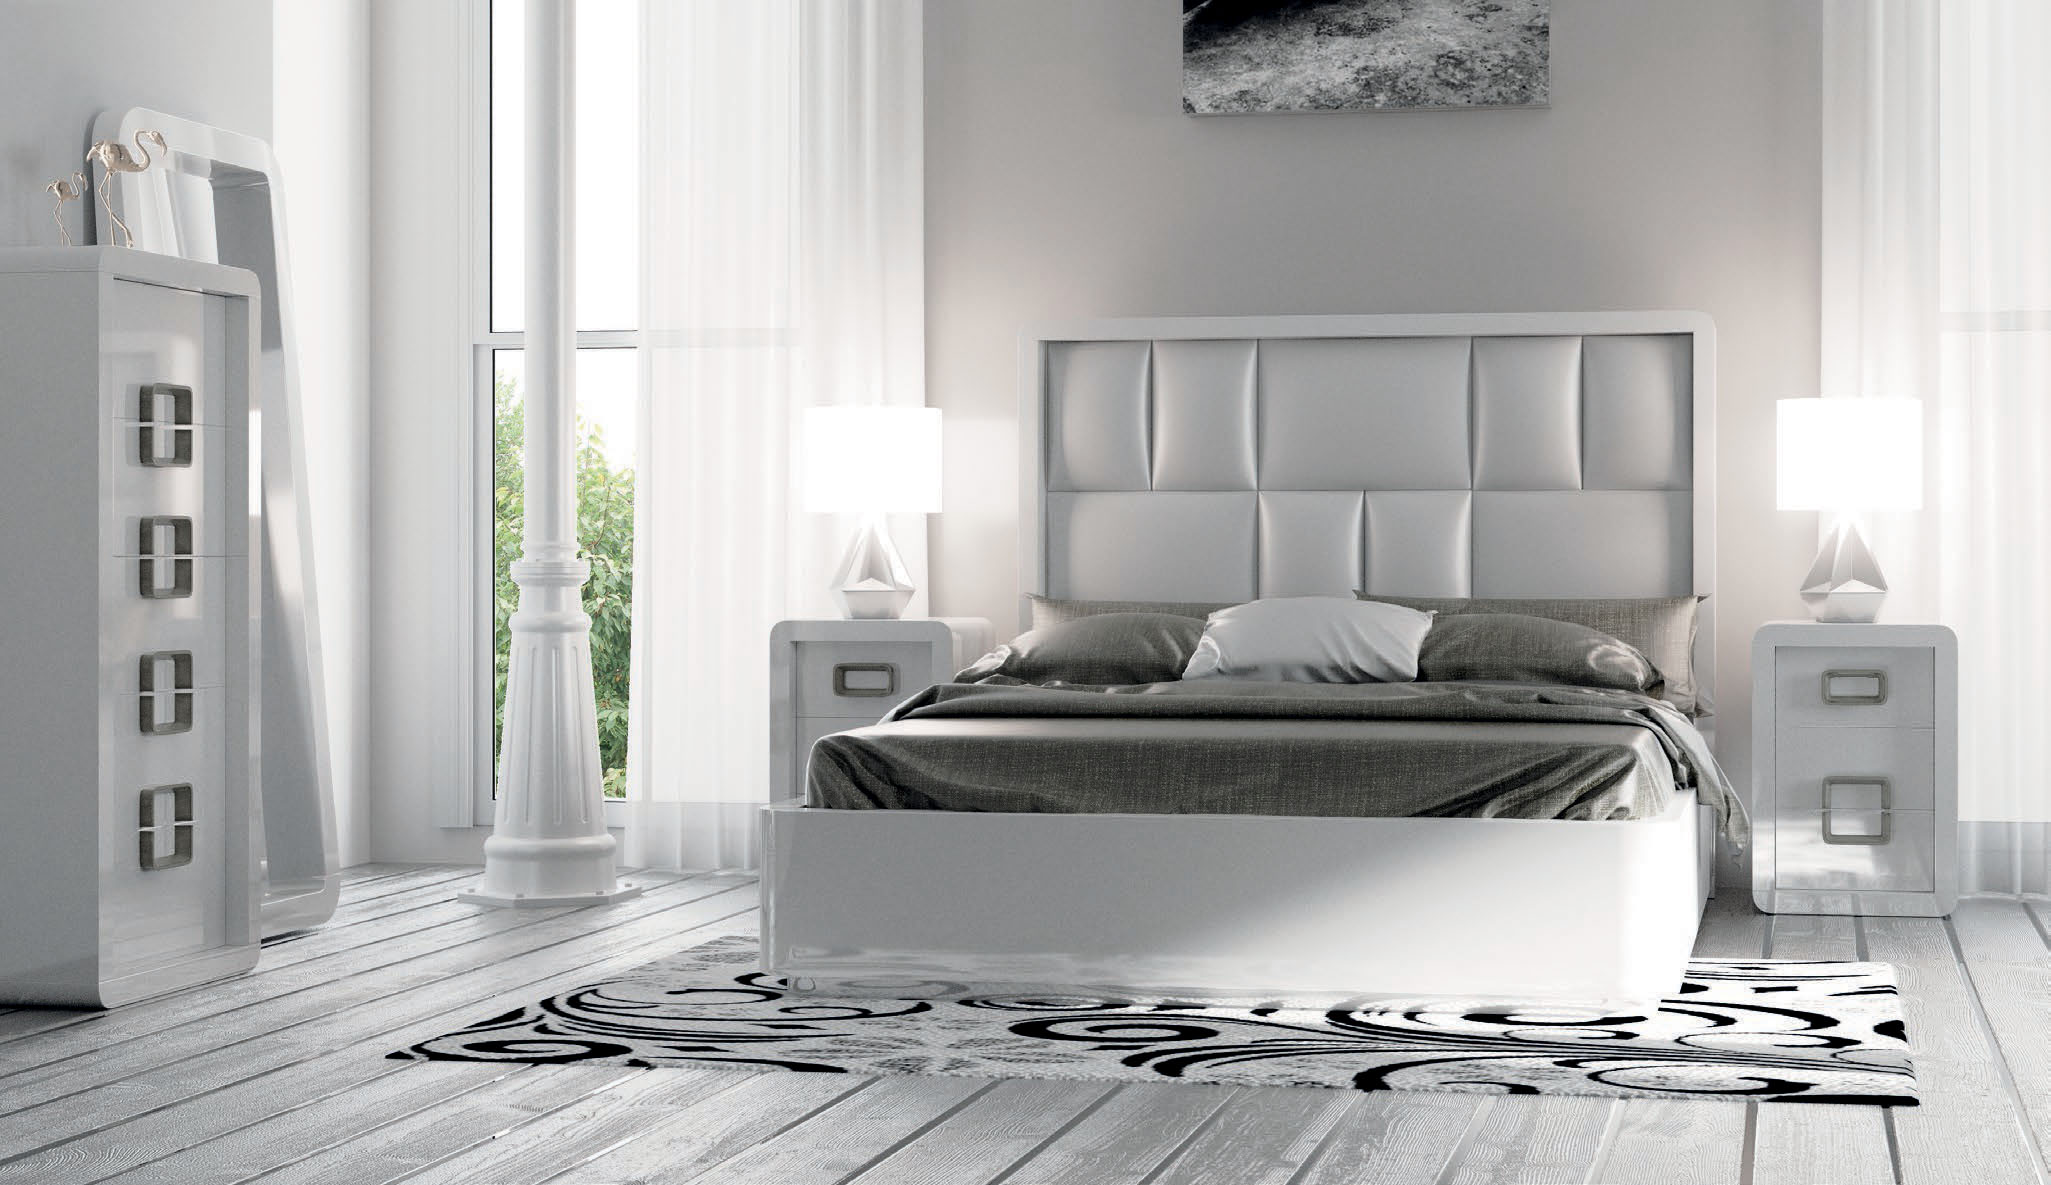 Brands Franco Furniture Bedrooms vol1, Spain DOR 174